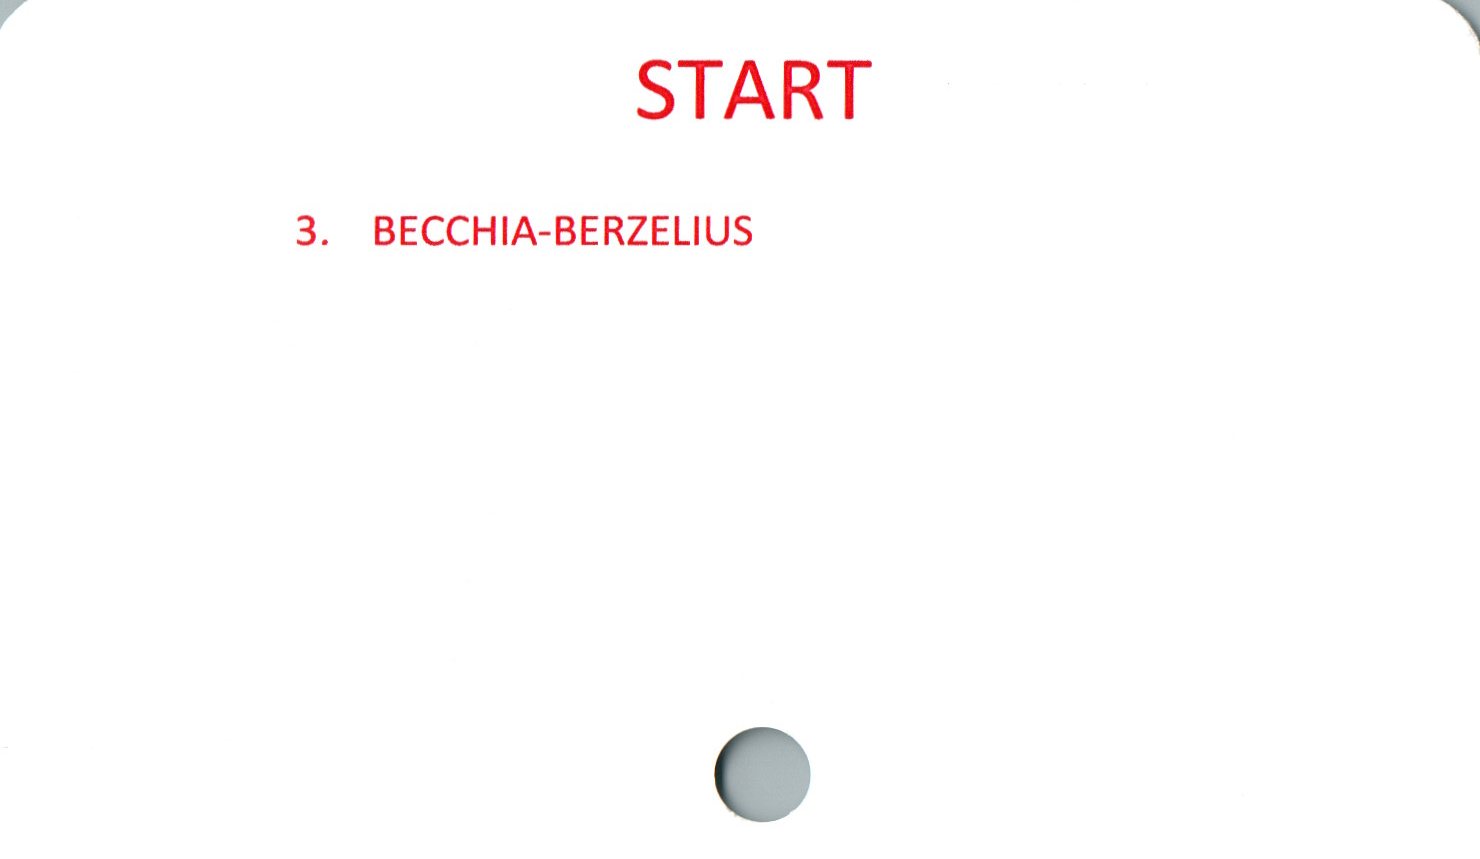  ﻿START

3. BECCHIA-BERZELIUS